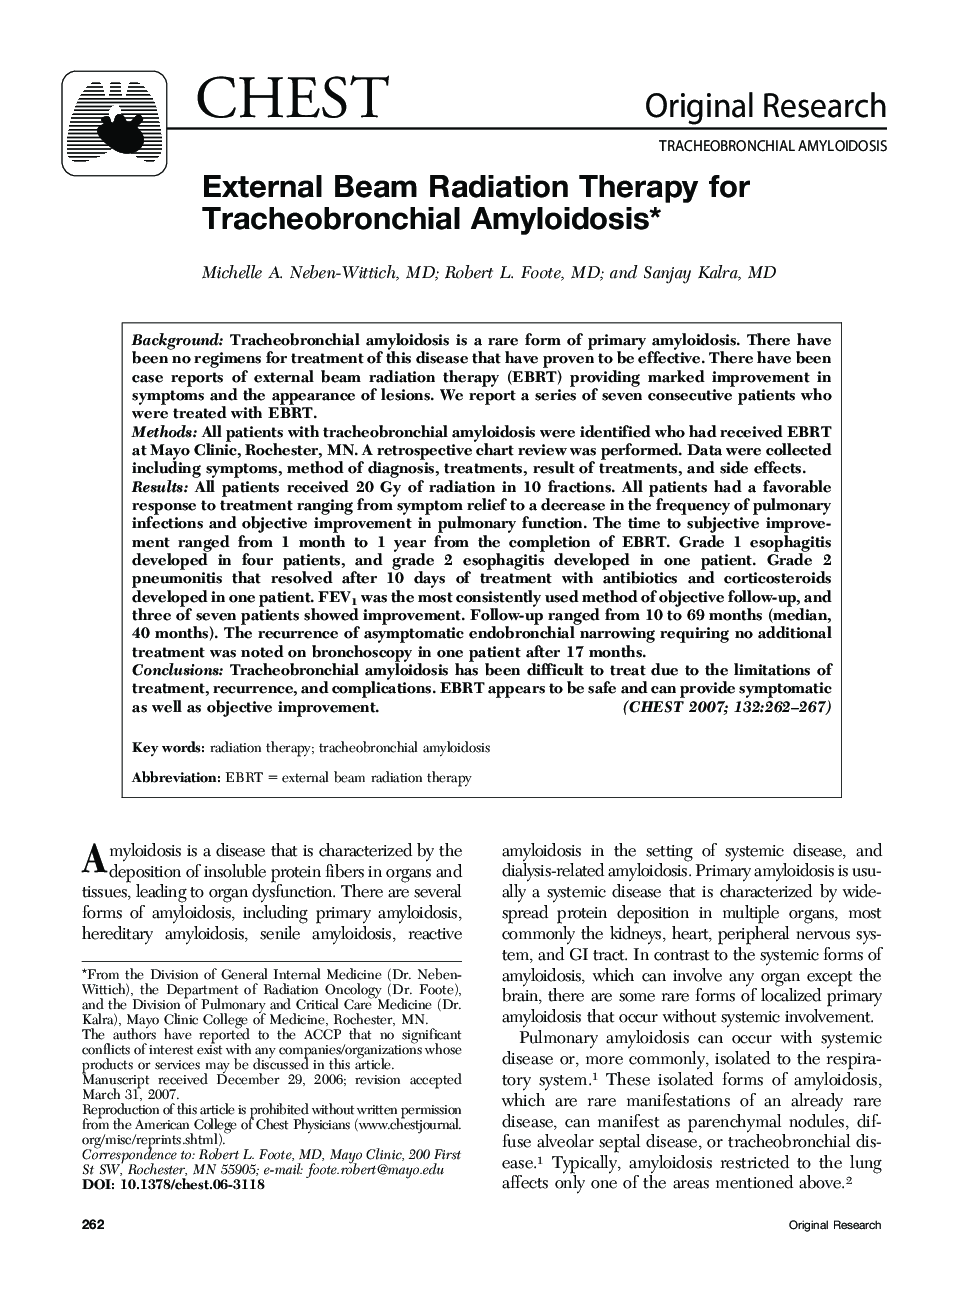 External Beam Radiation Therapy for Tracheobronchial Amyloidosis 